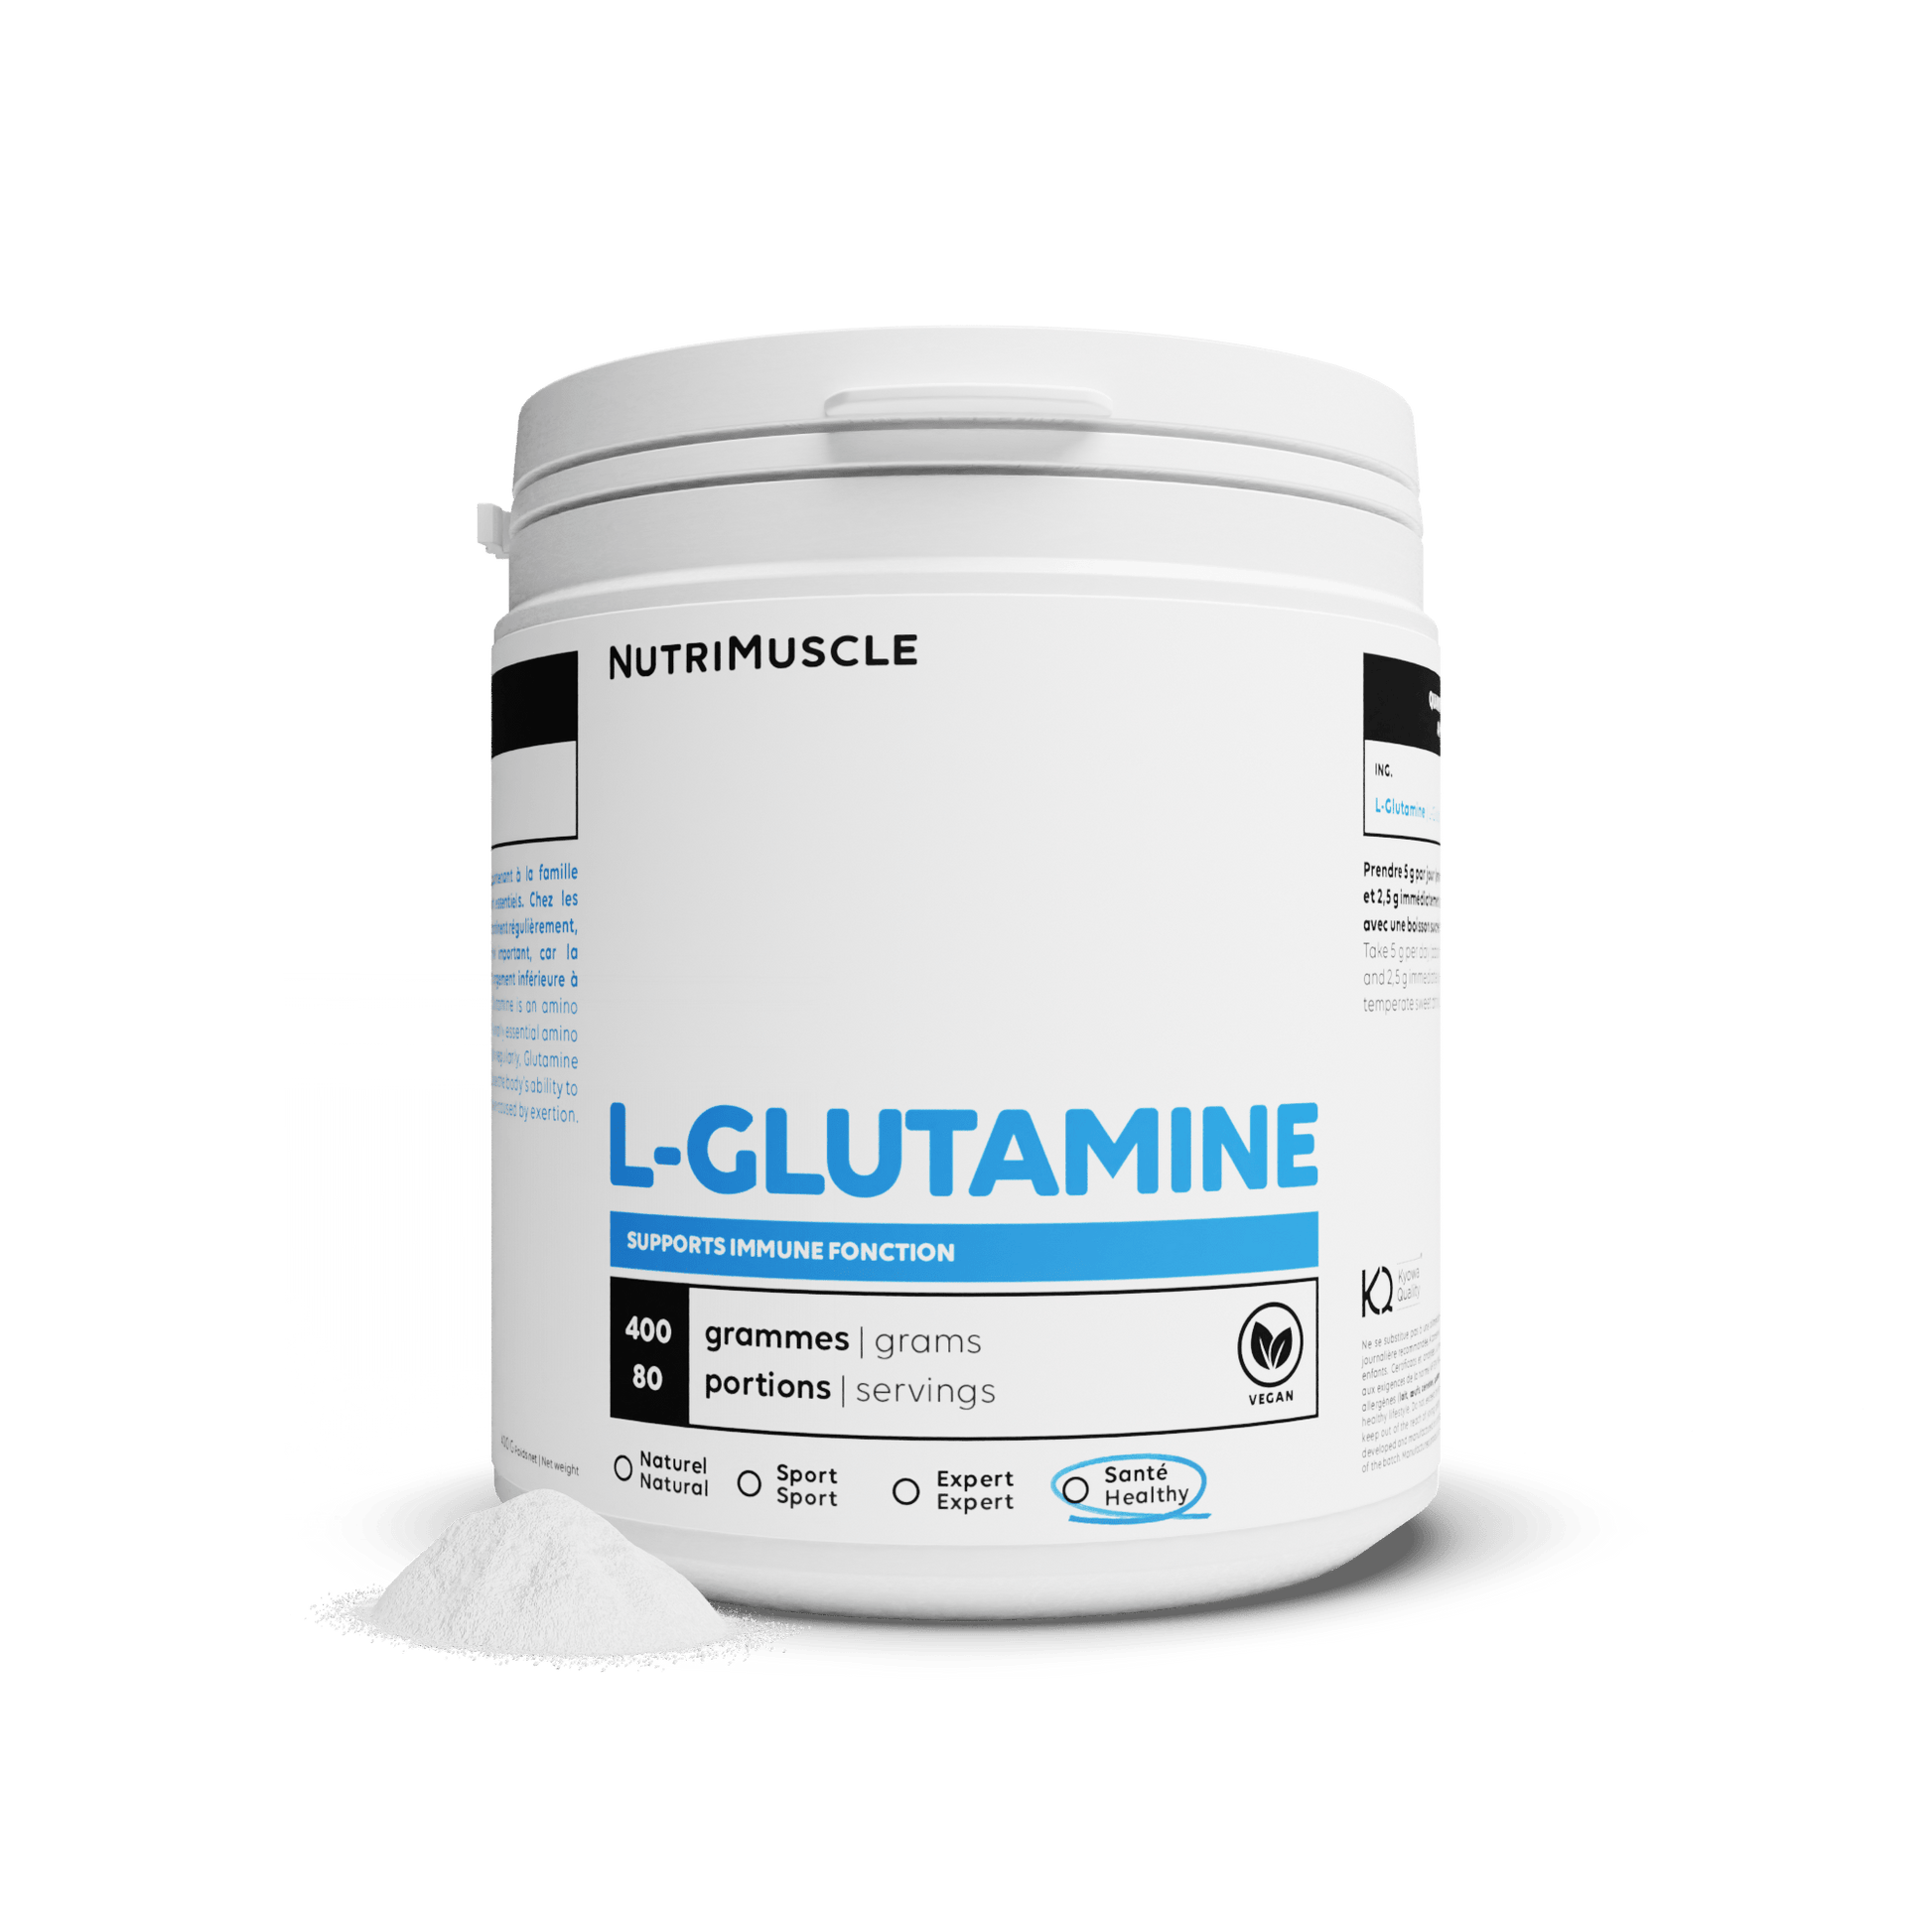 Nutrimuscle Acides aminés Glutamine (L-Glutamine) en poudre